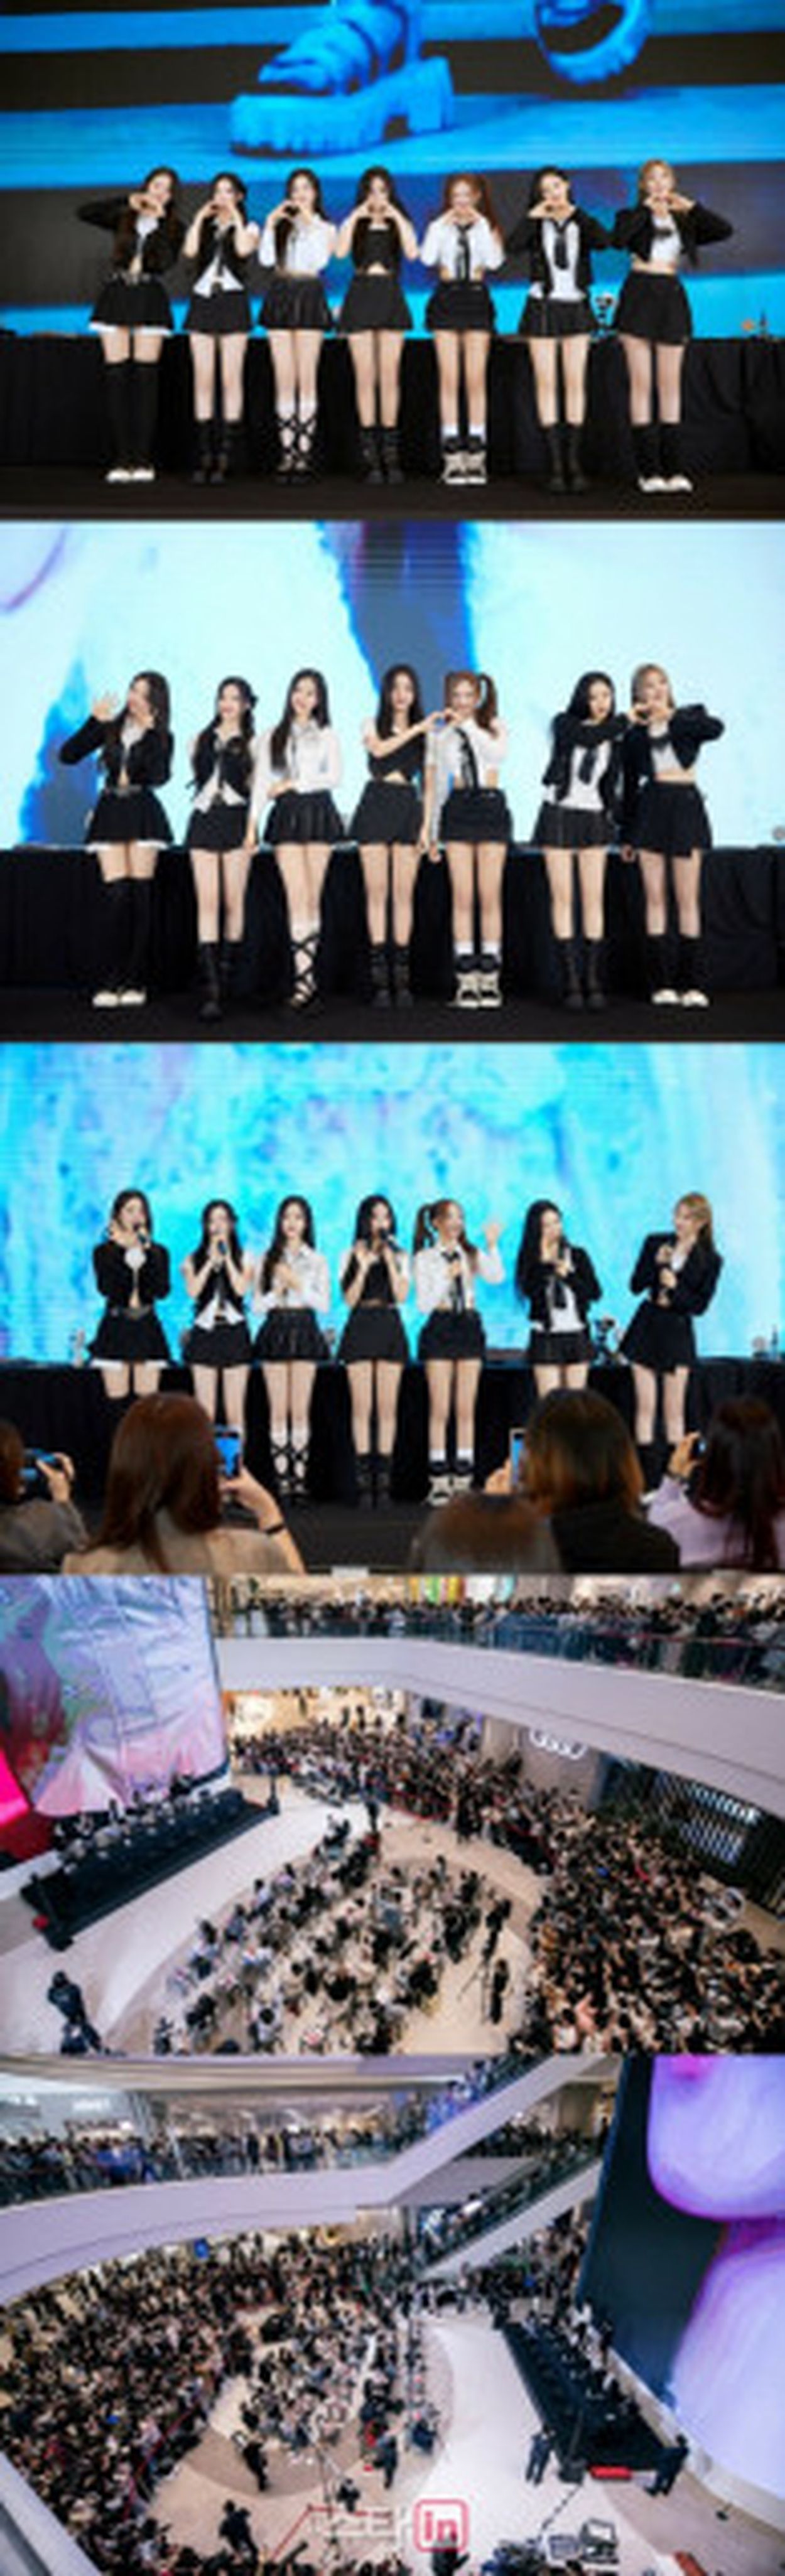 BABYMONSTER」、初のサイン会開催「緊張したけれど幸せ」(WoW!Korea) - goo ニュース